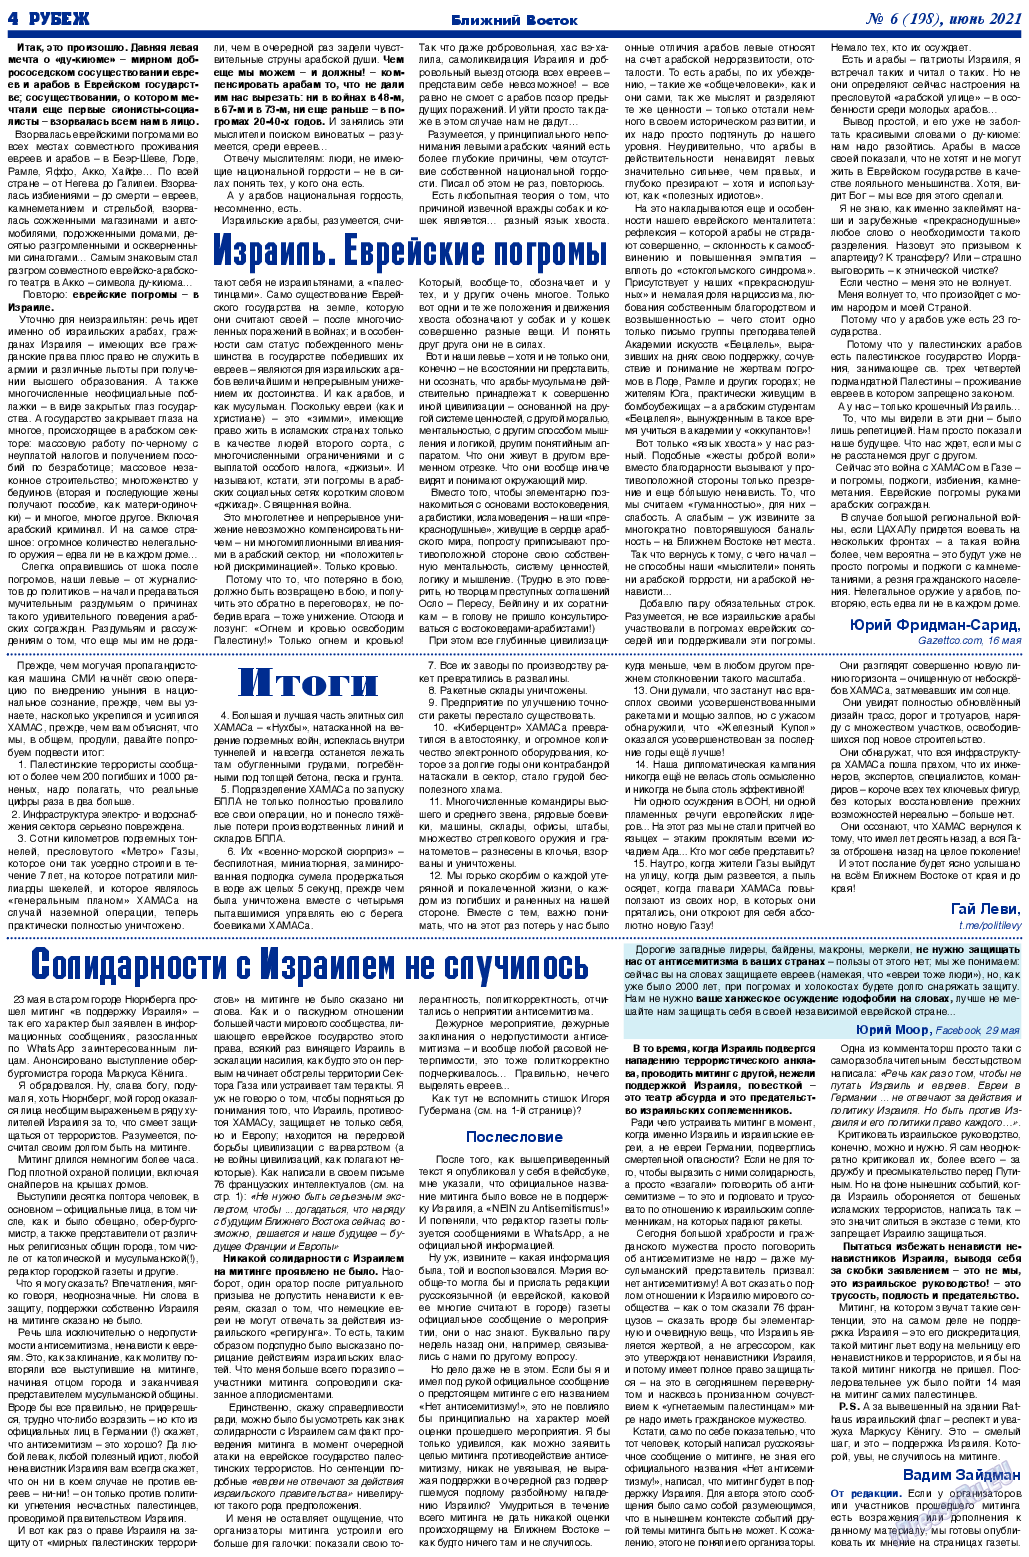 Рубеж, газета. 2021 №6 стр.4